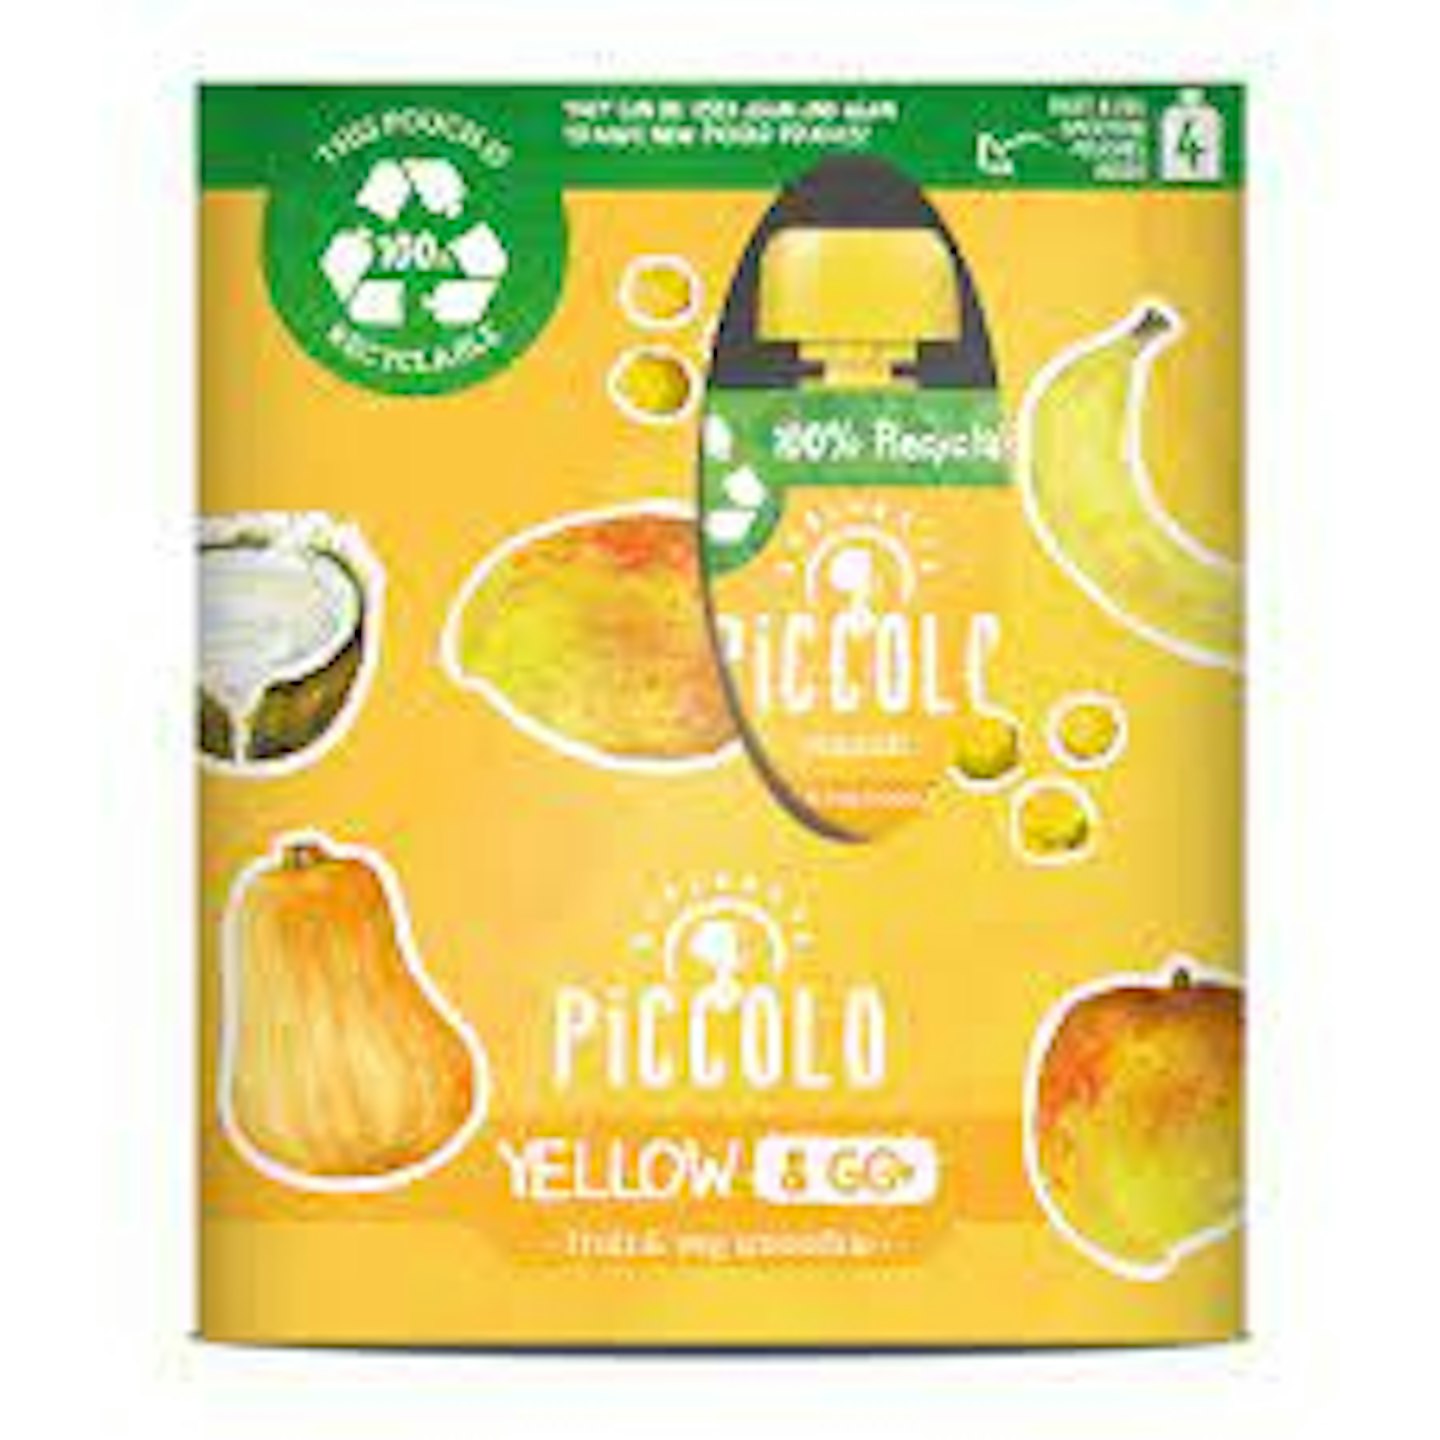 Piccolo Organic Yellow & Go smoothie